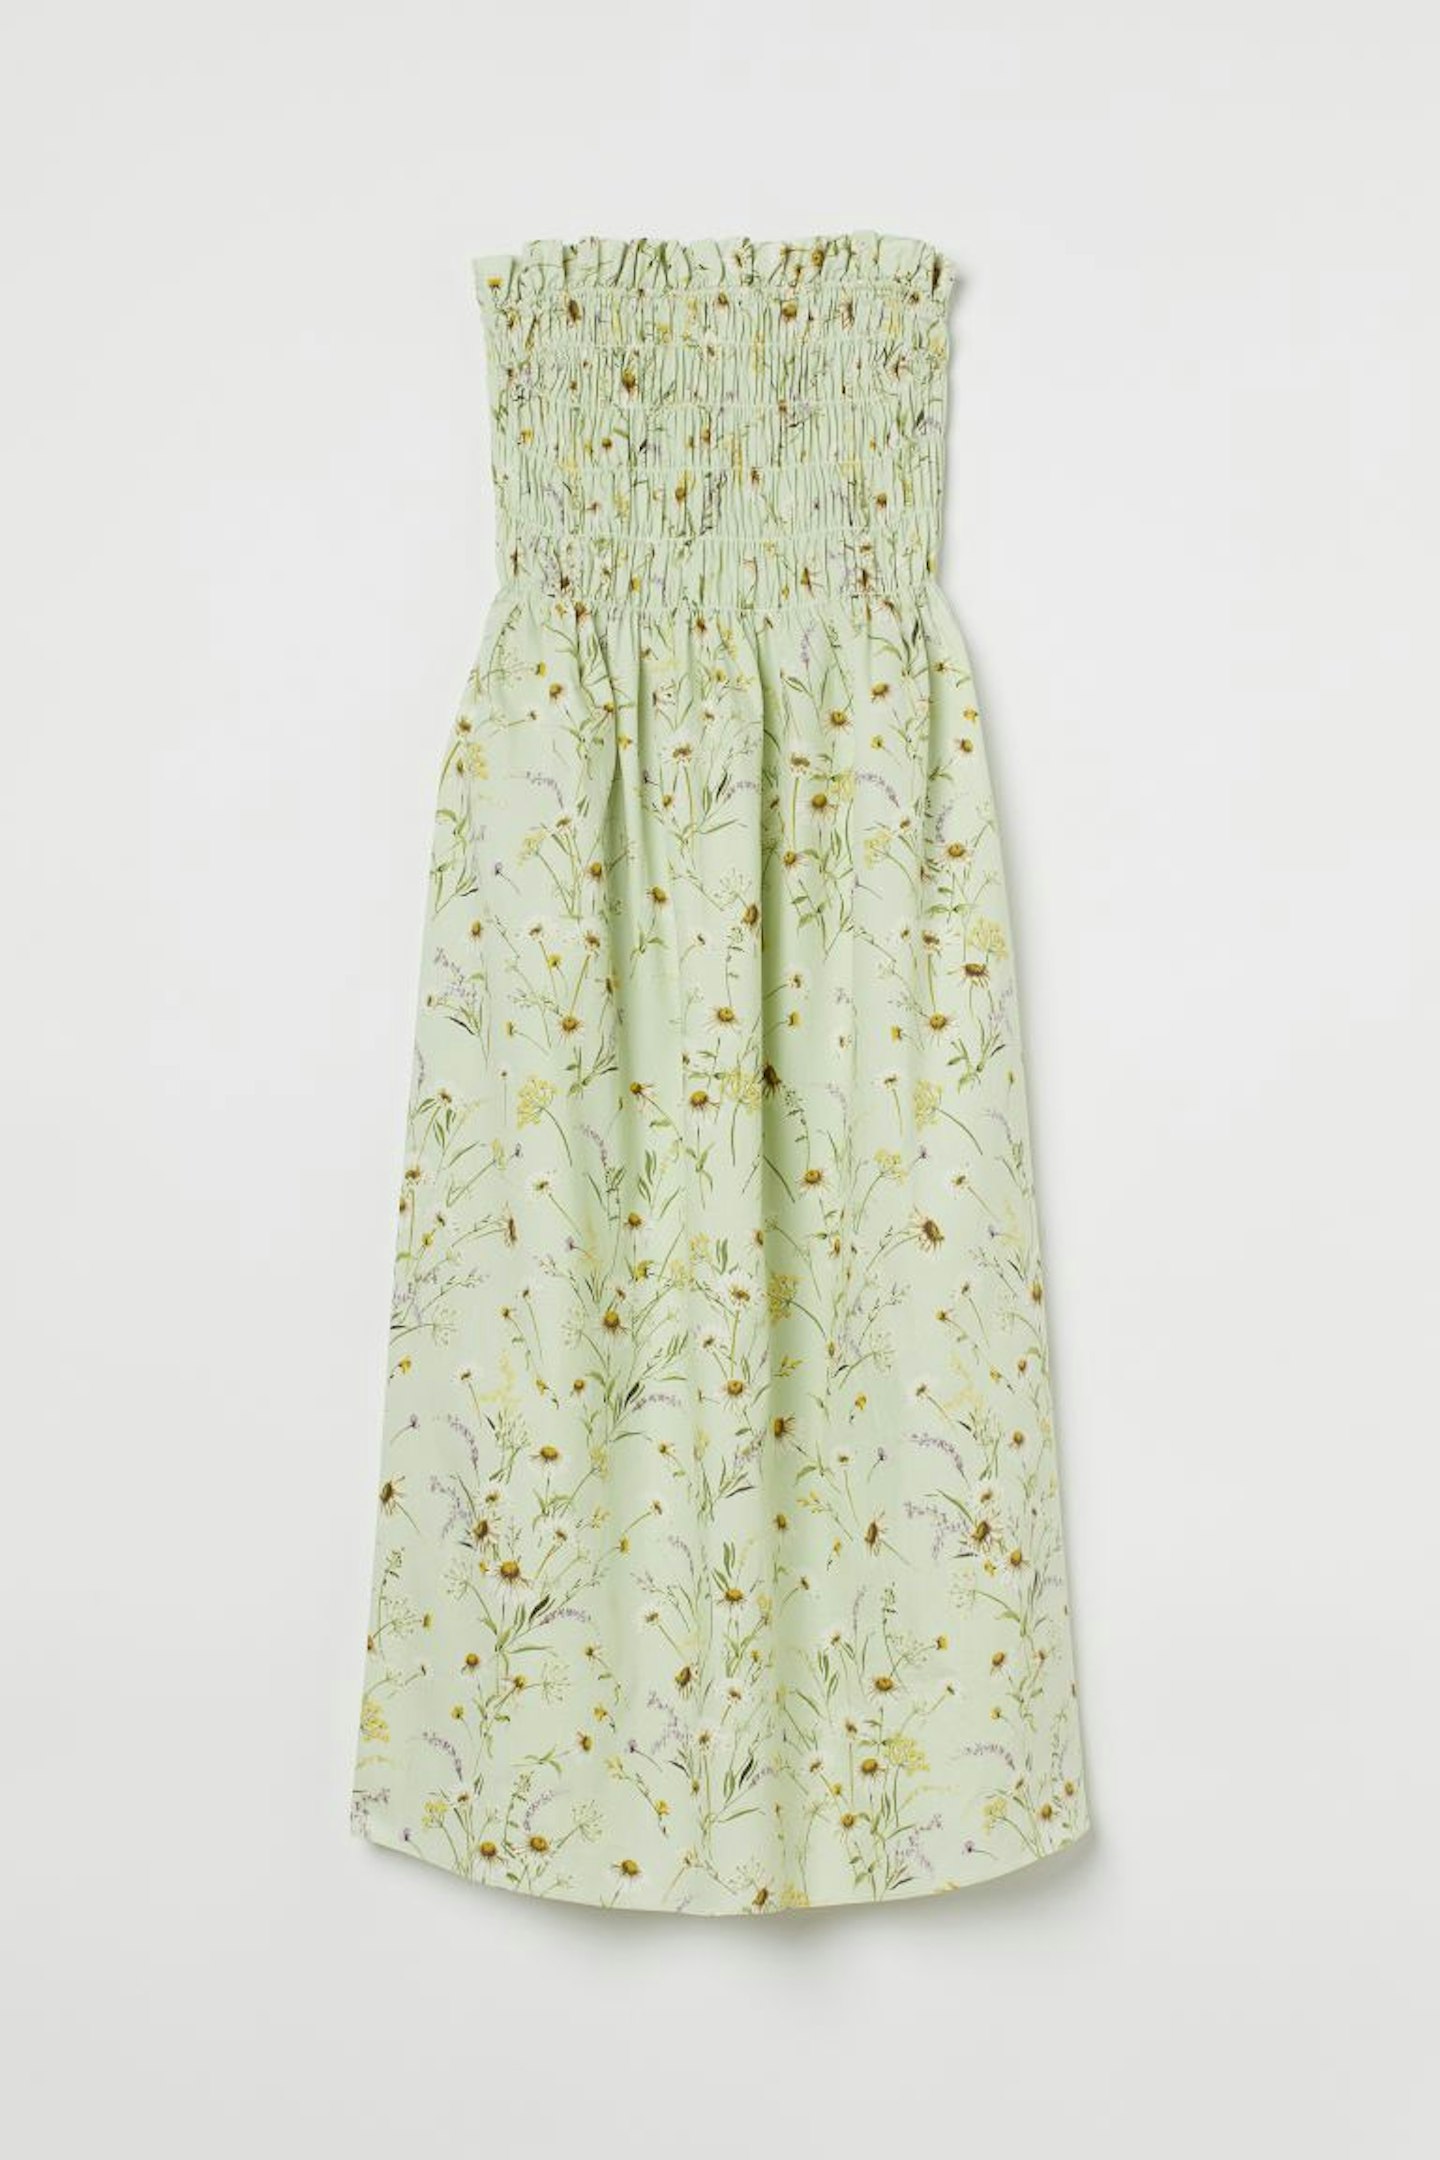 Smocked Bandeau Dress, £17.99